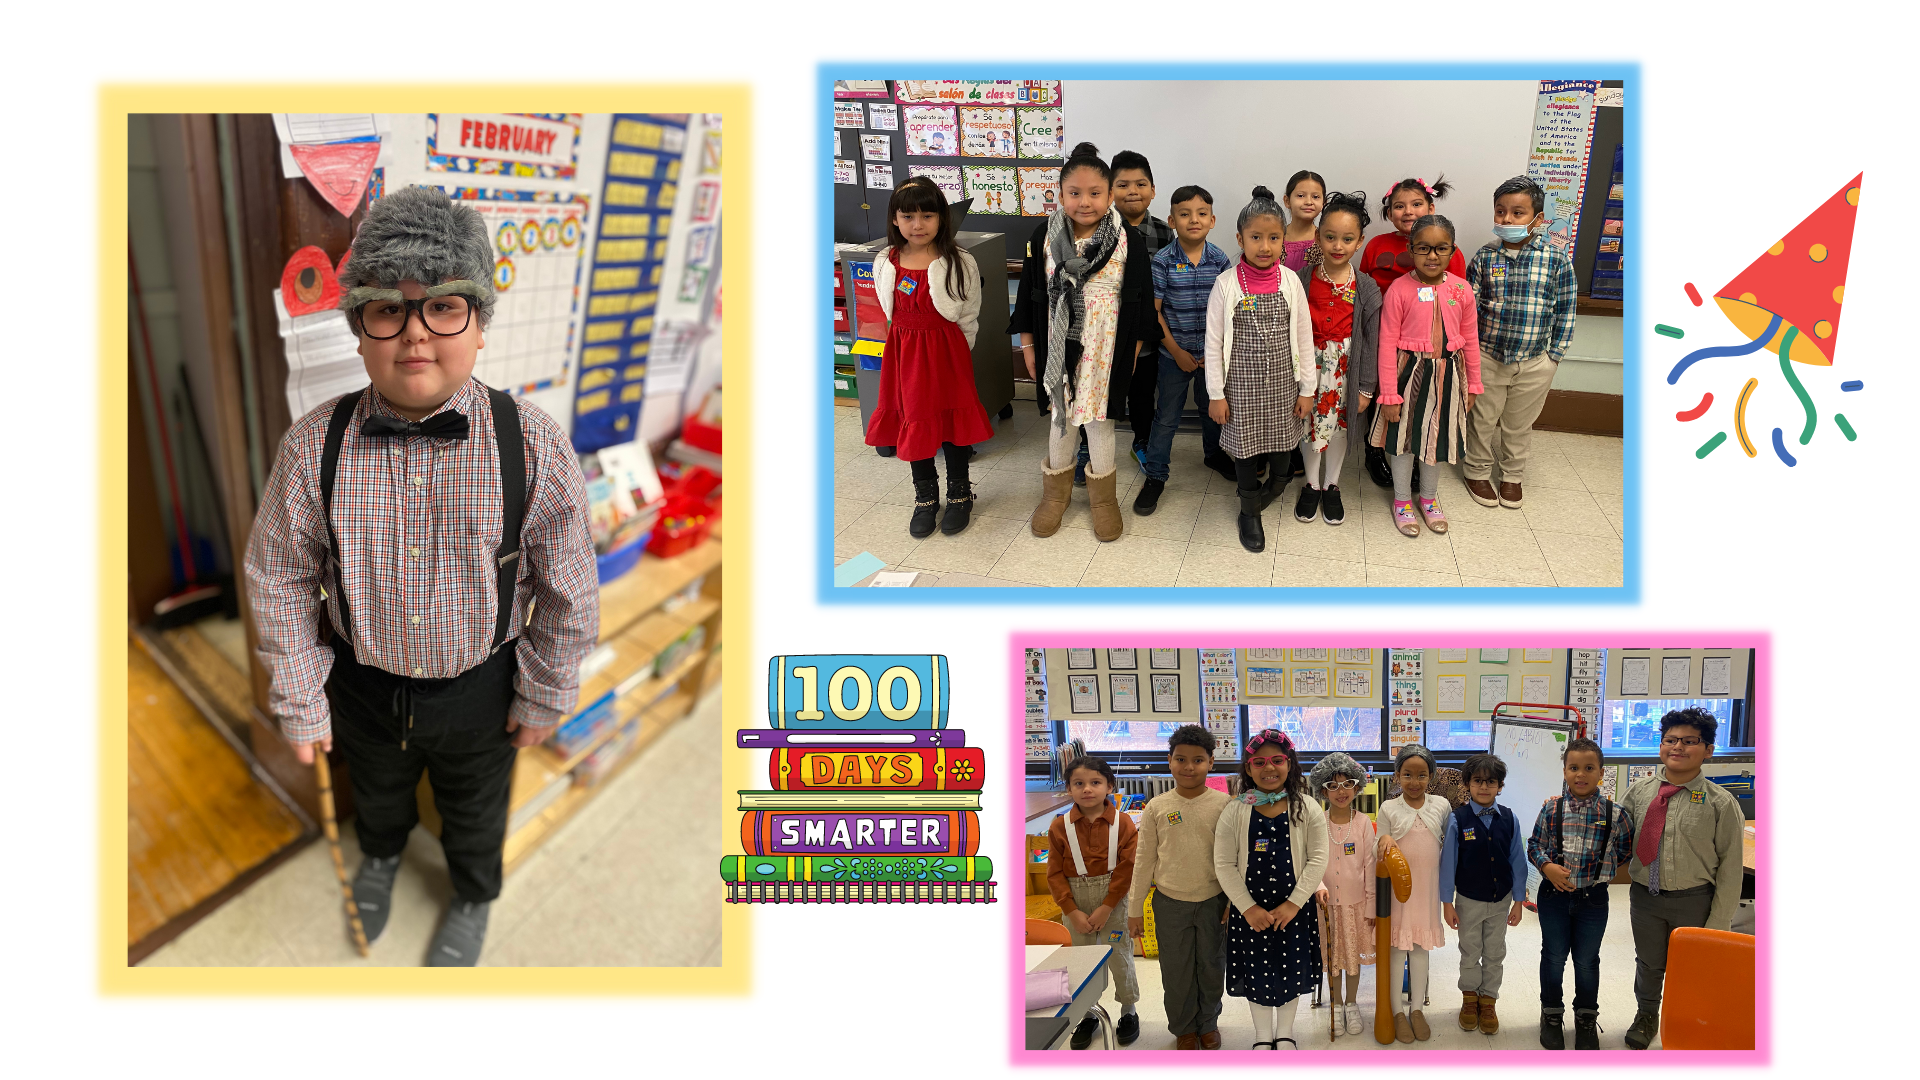 Celebrating 100 days at the Roosevelt School